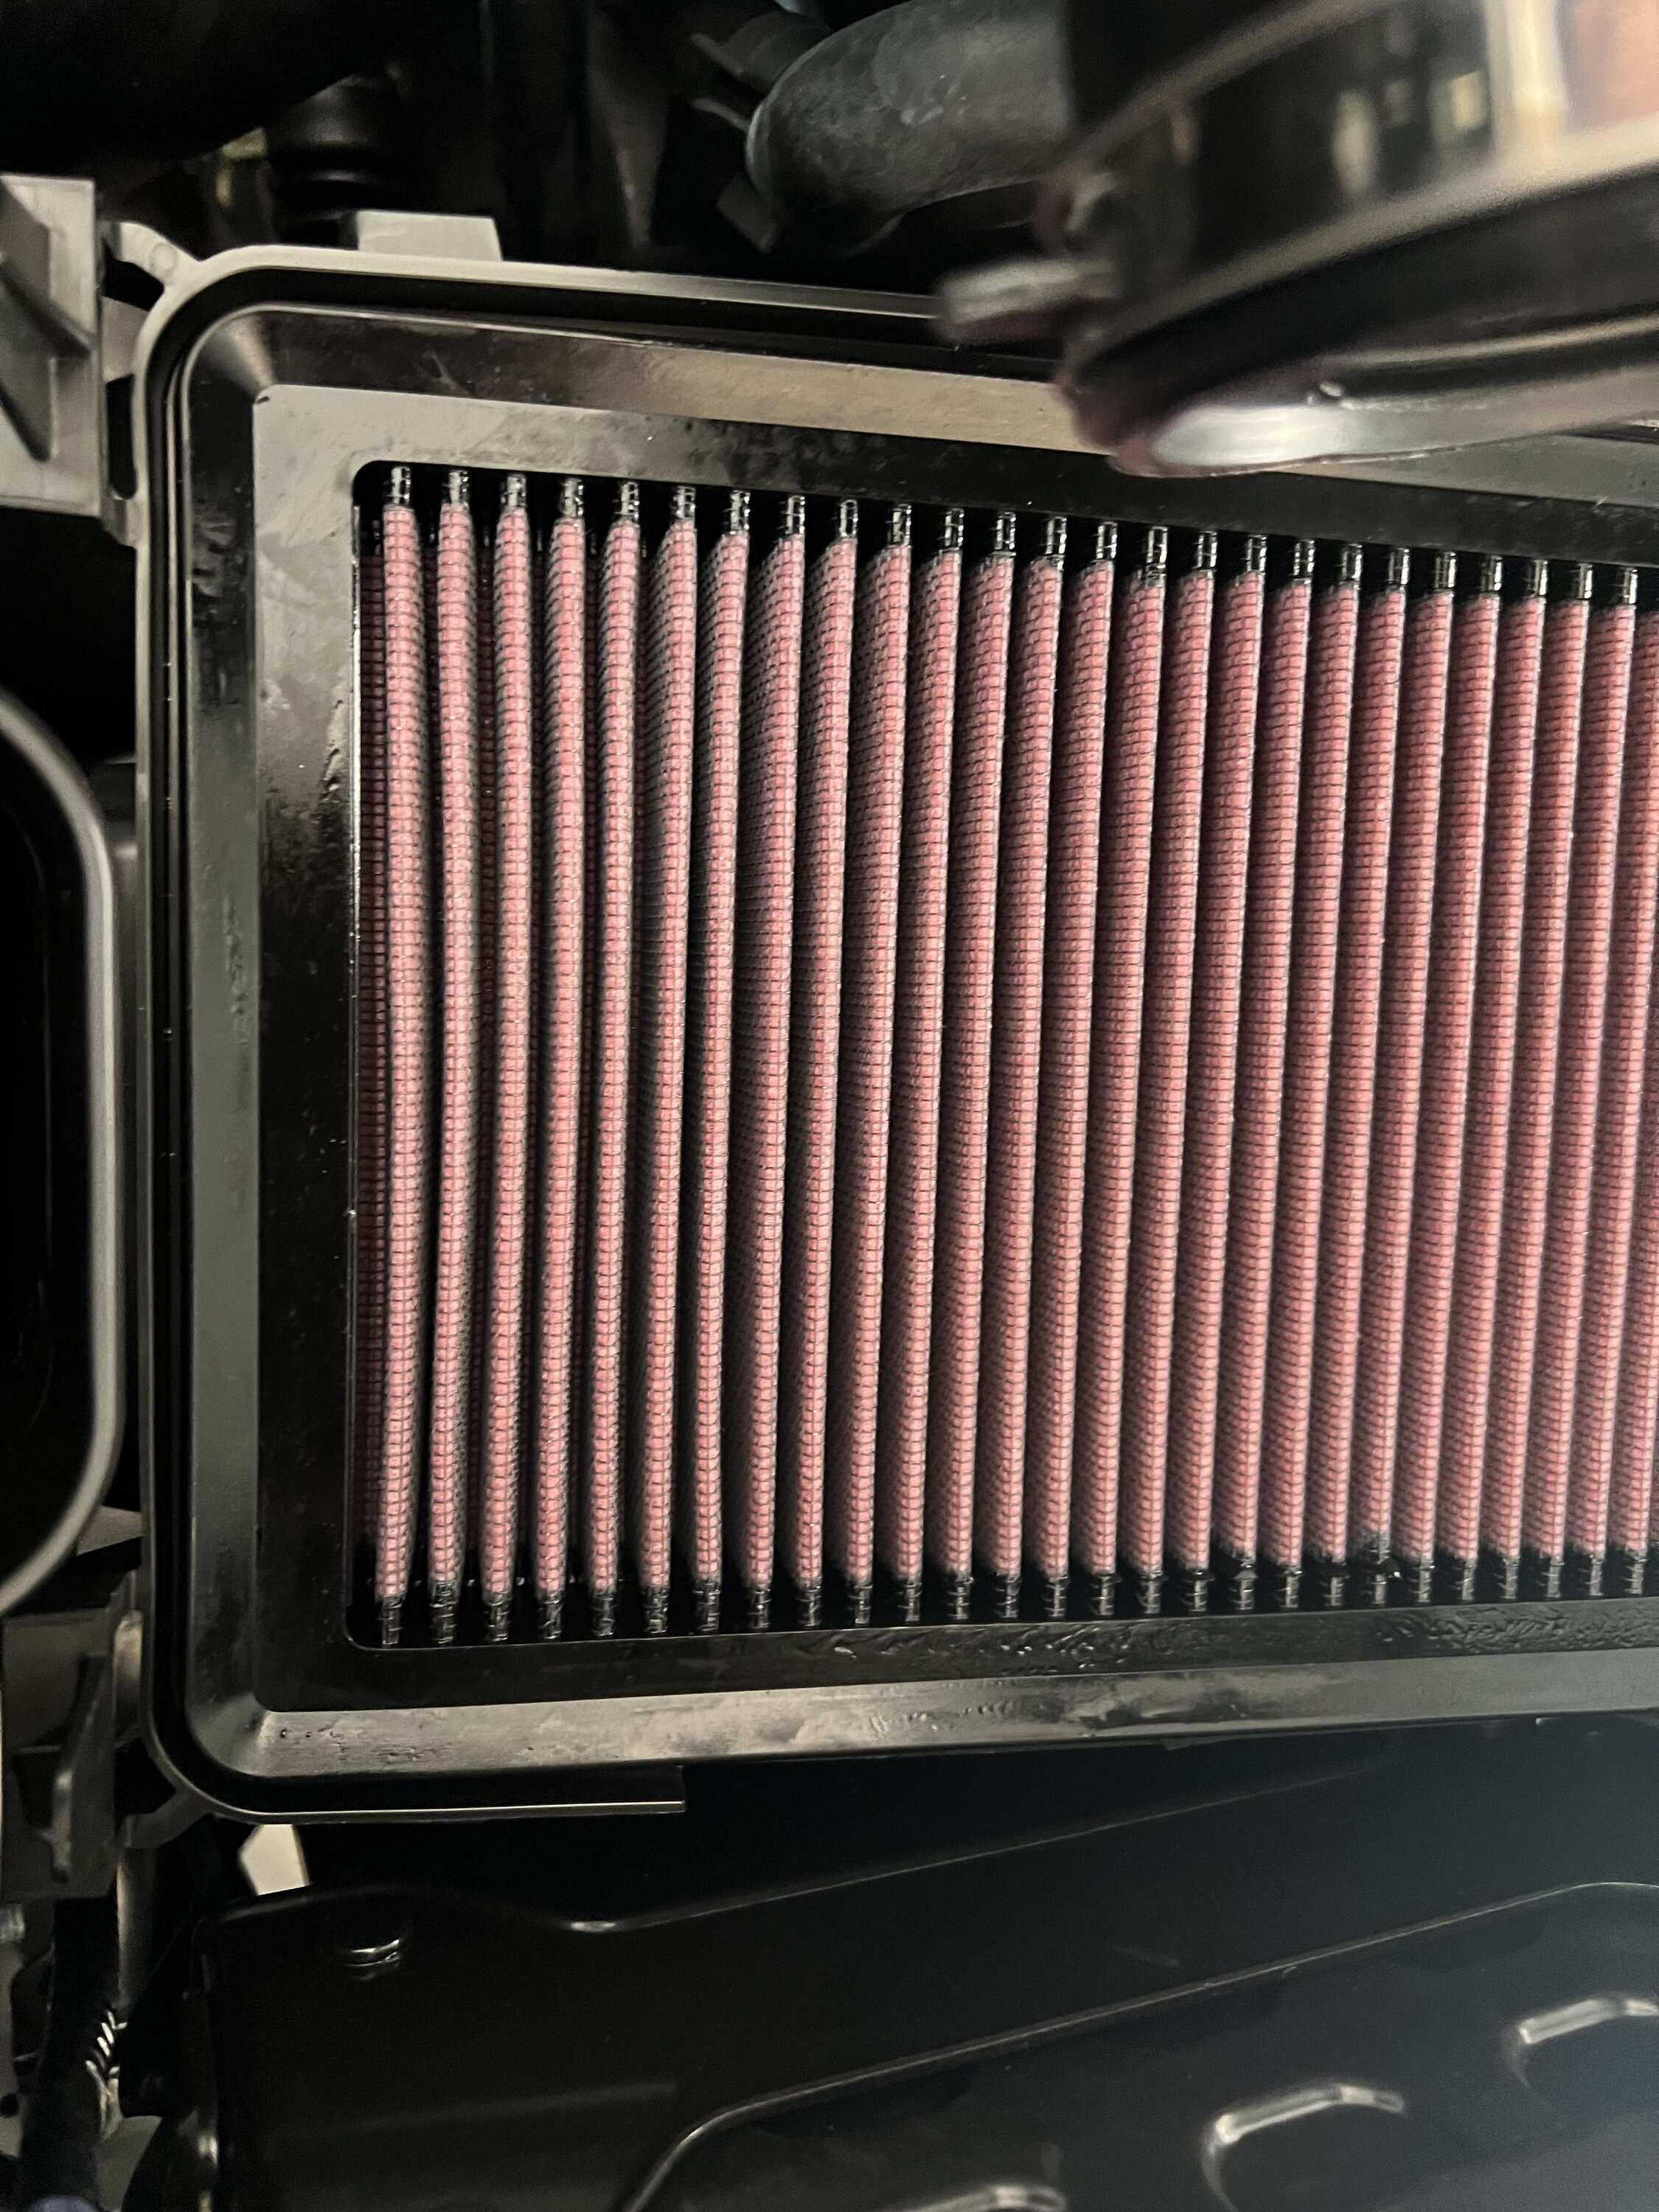 11th Gen Honda Civic Confirmed K&N filter size. IMG_7200